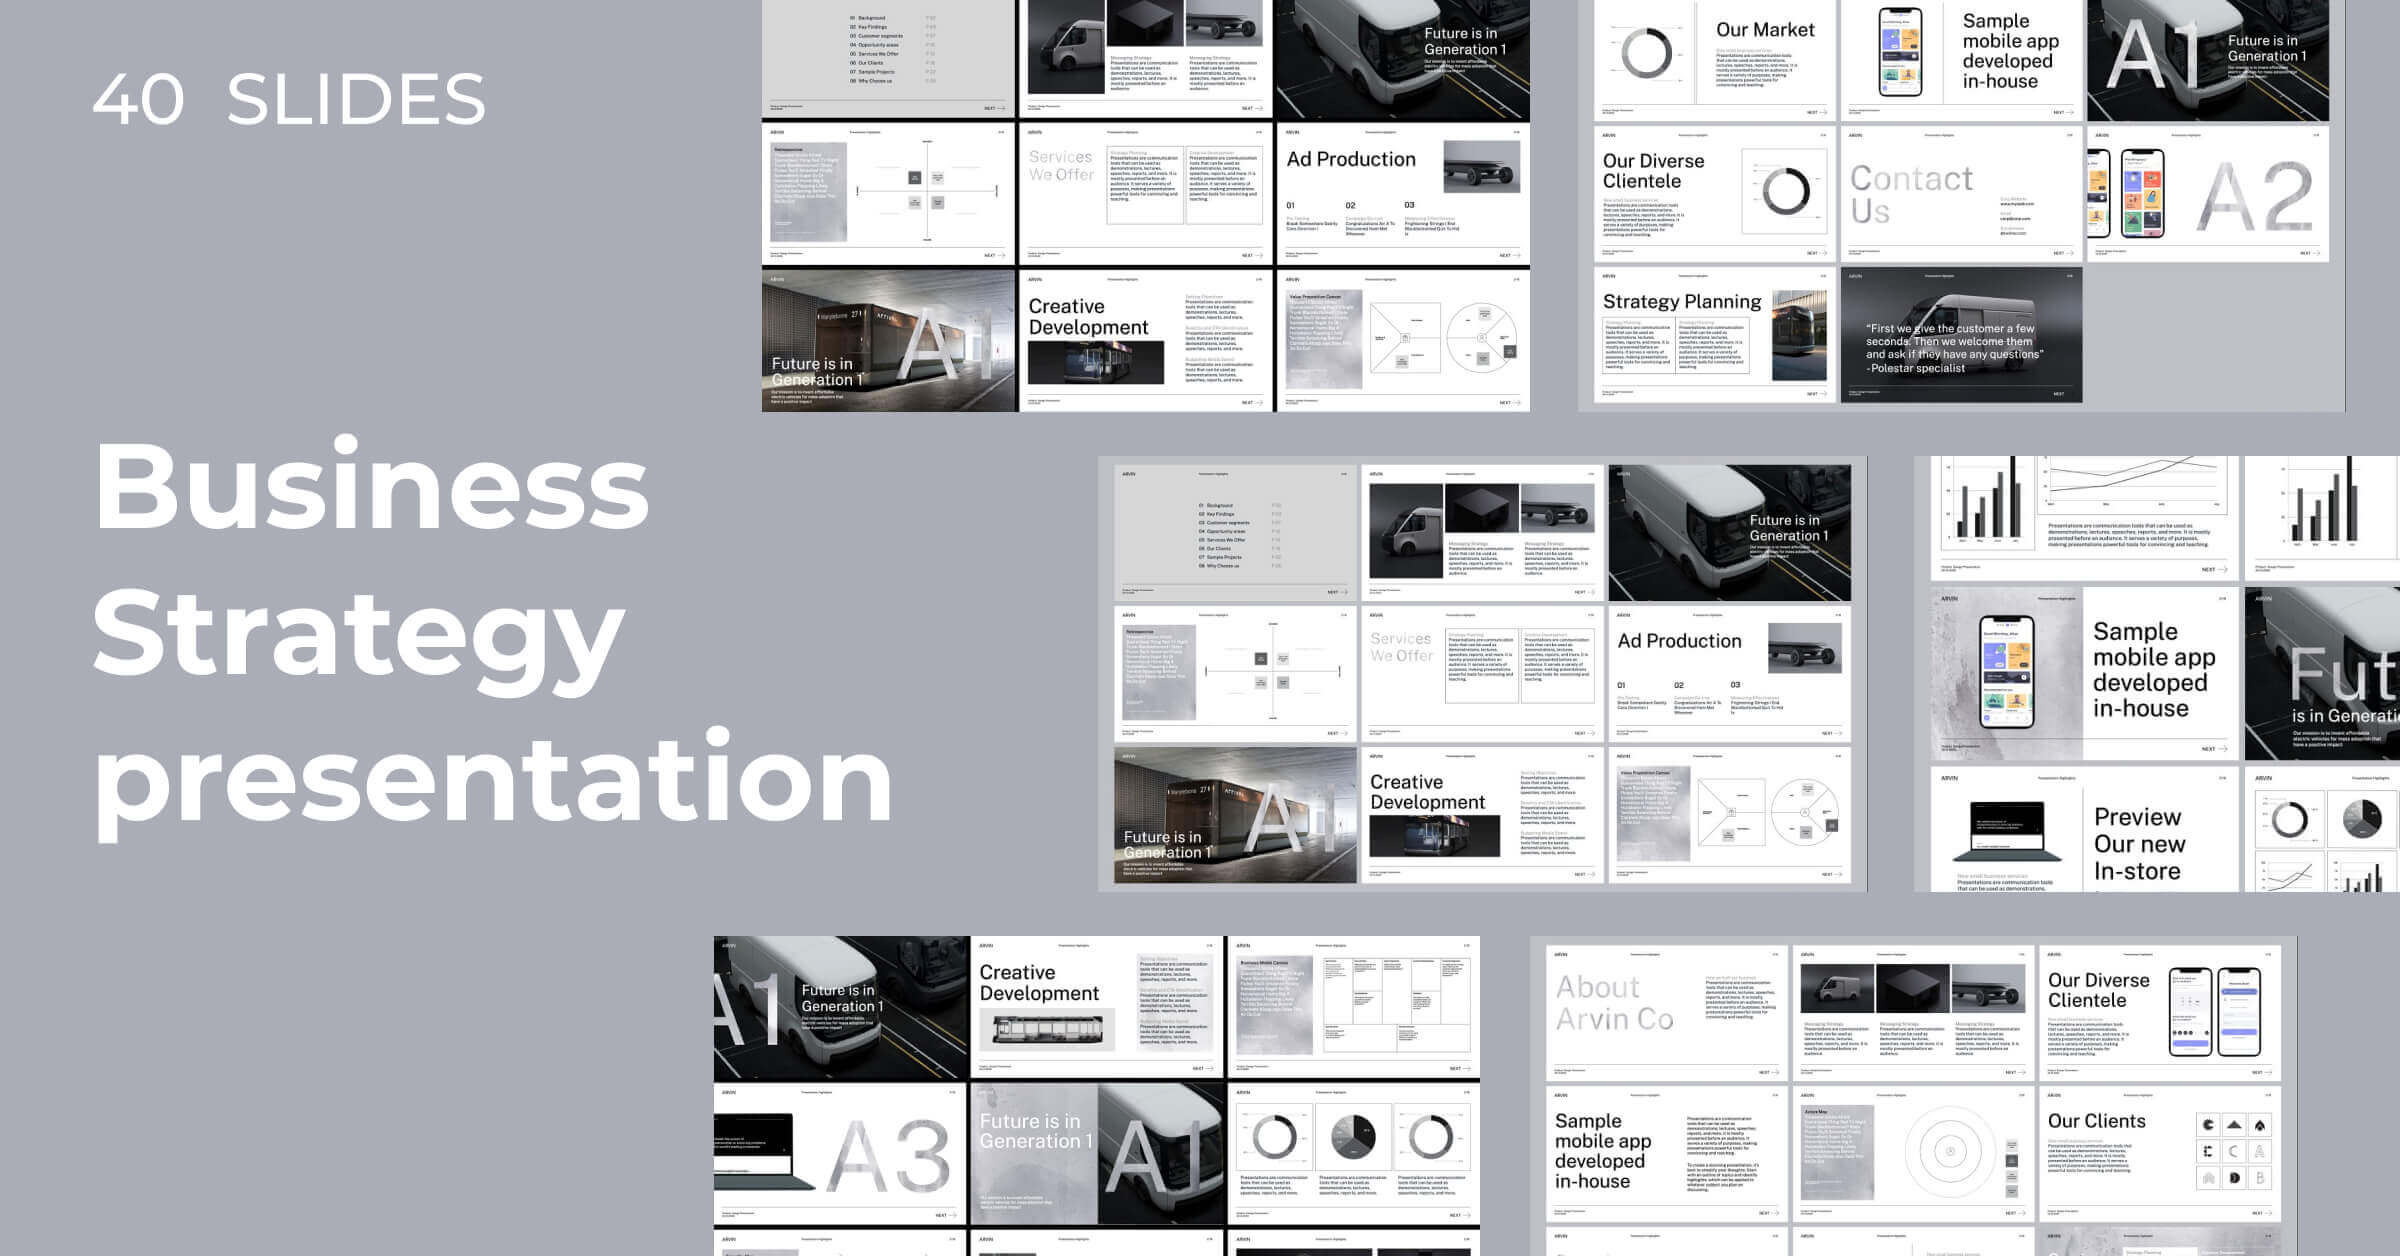 40 Slides of Business Strategy Presentation.